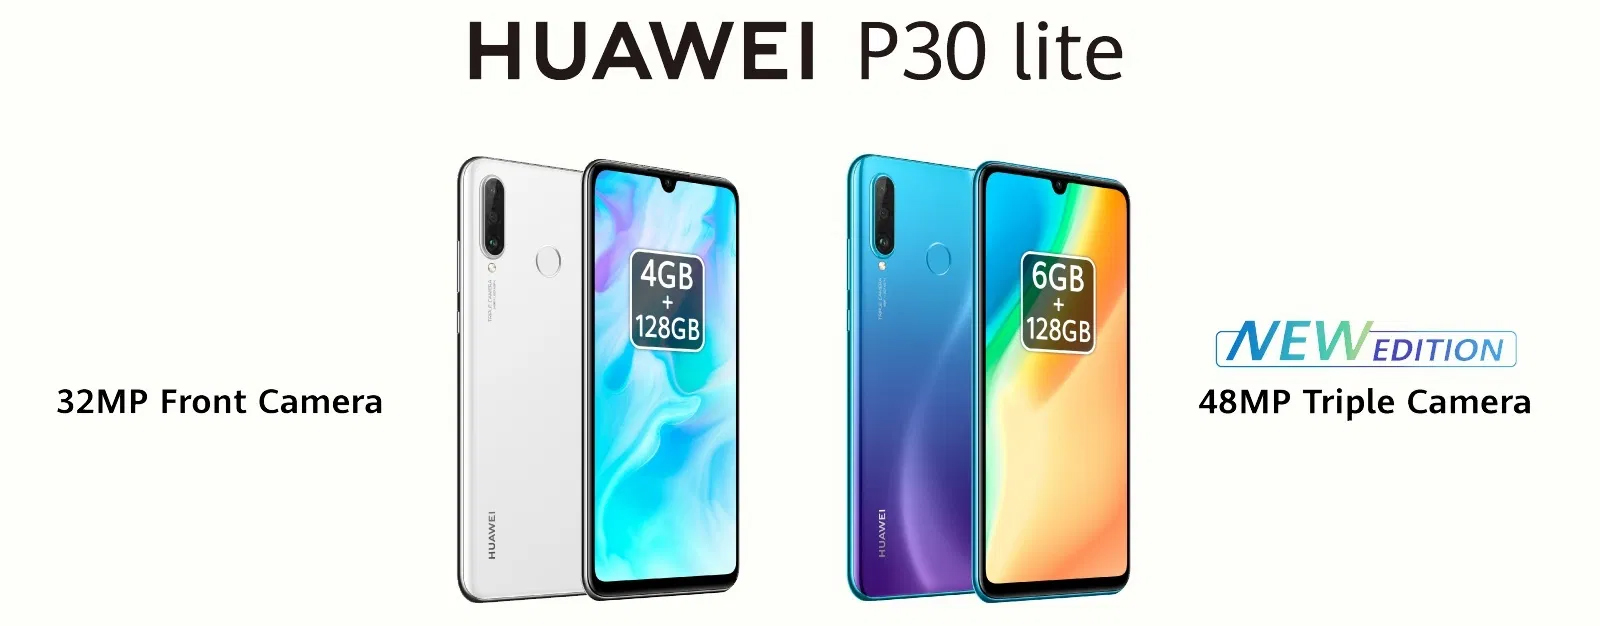 Huawei p30 Lite specificaties